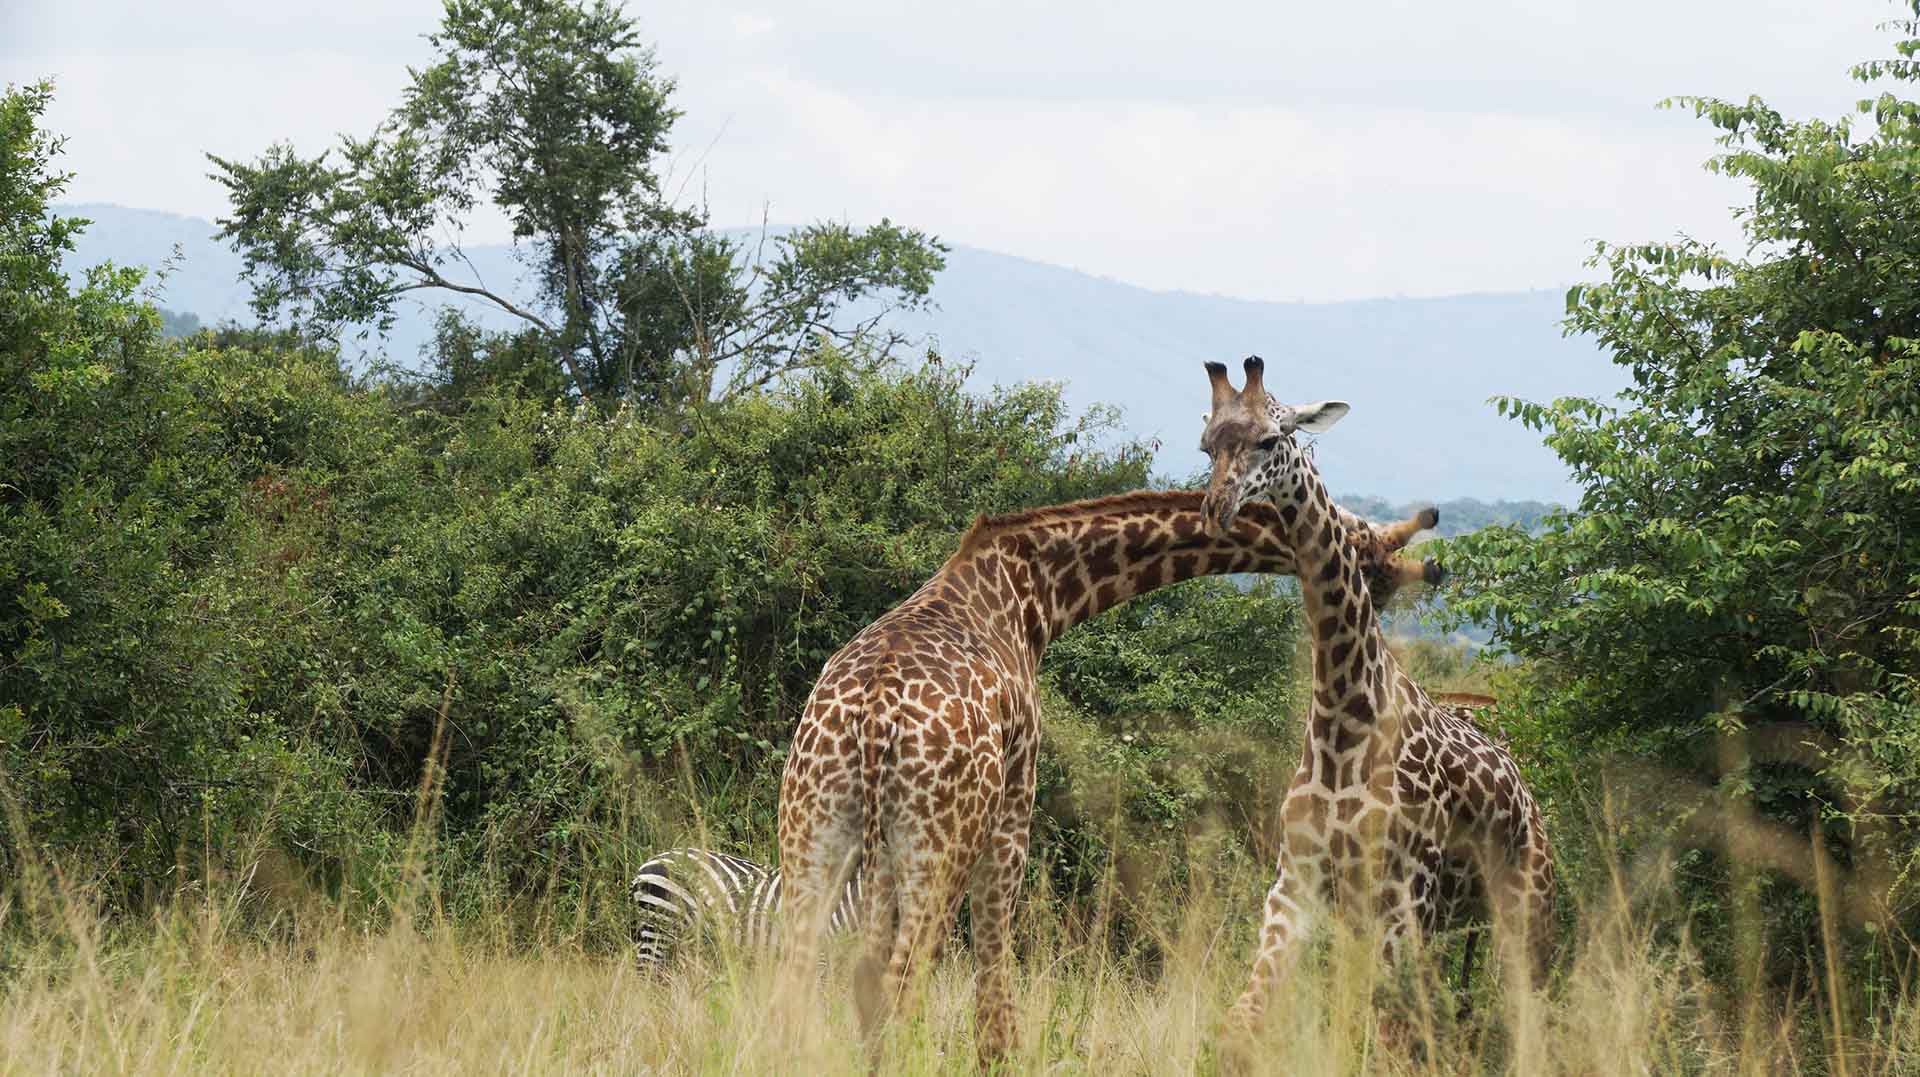 TGiraffes and Zebras together, Wildlife in Rwanda, Africa